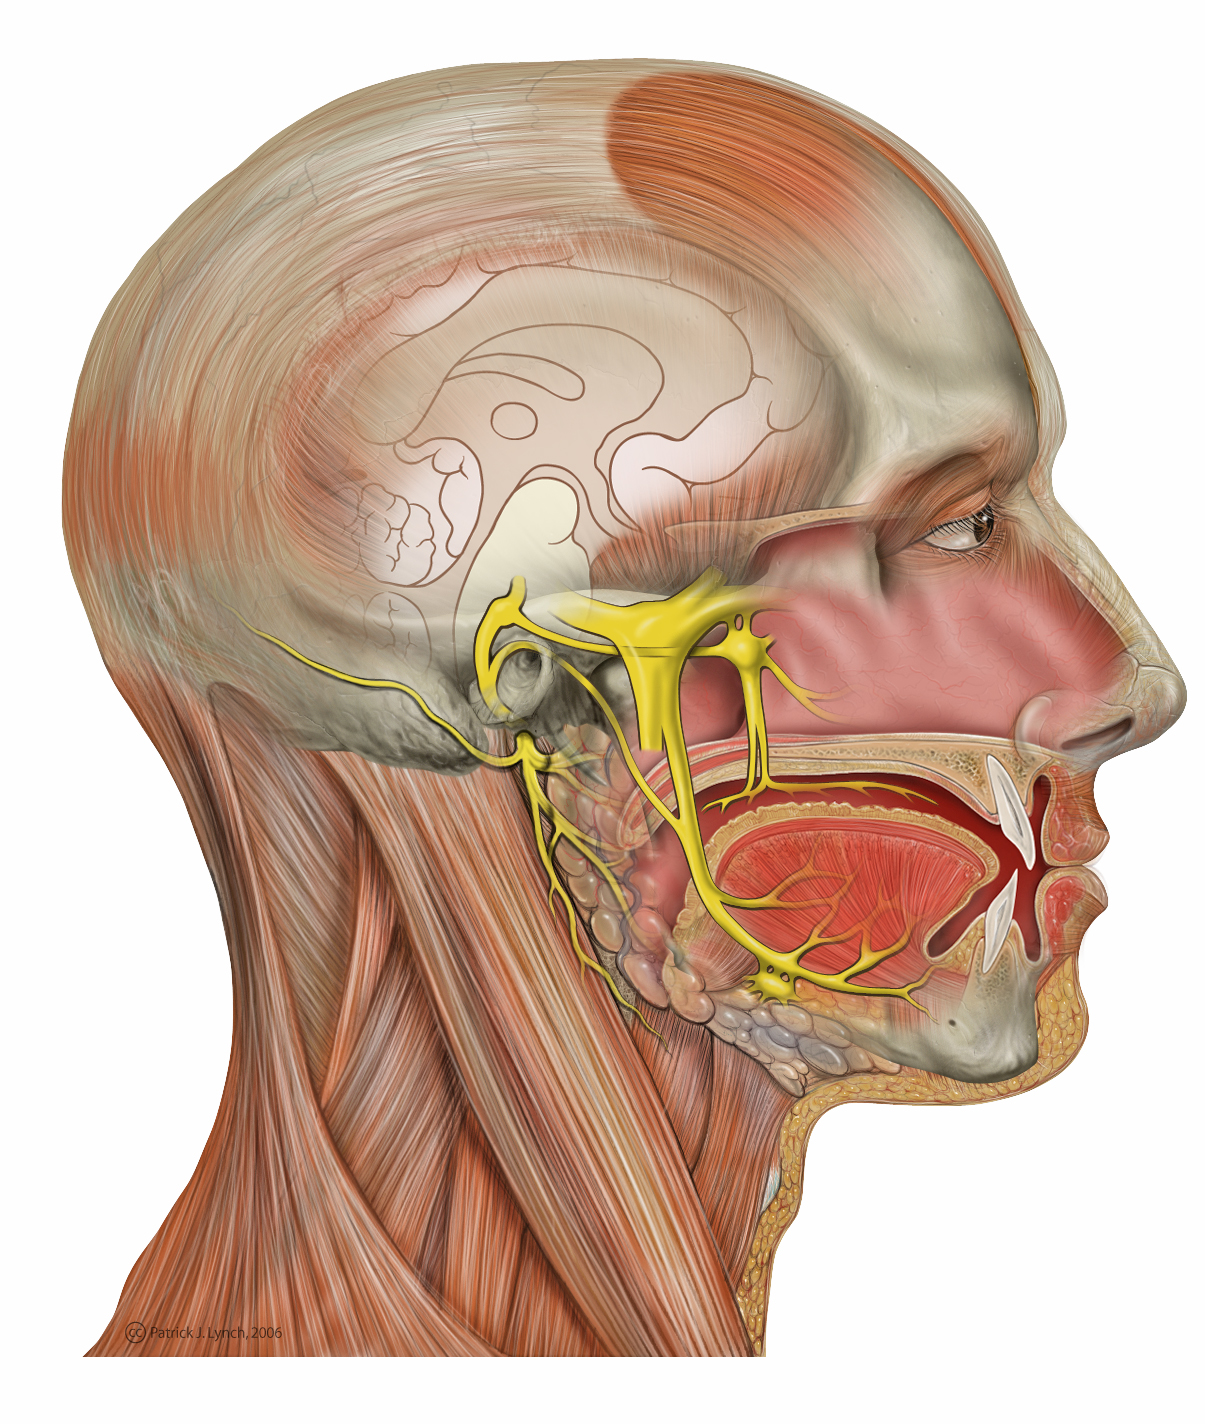 Trigeminal nerve - wikidoc